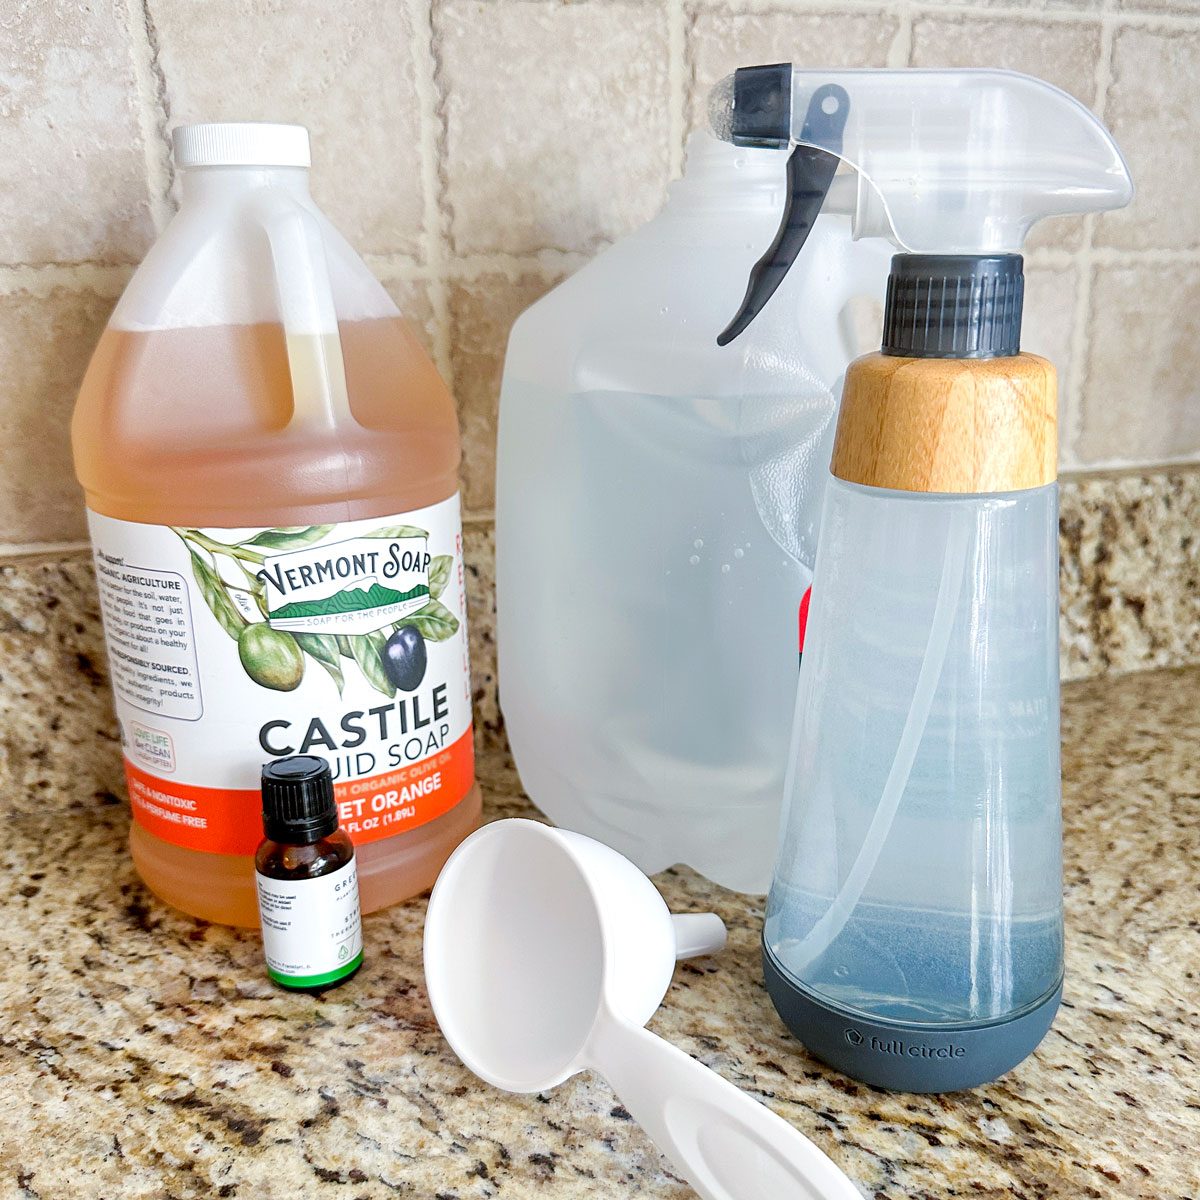 Diy All Purpose Cleaner Spray, Liquid Soap Bottle, Spray bottle, distilled water bottle and Plastic Funnel on Kitchen Countertop